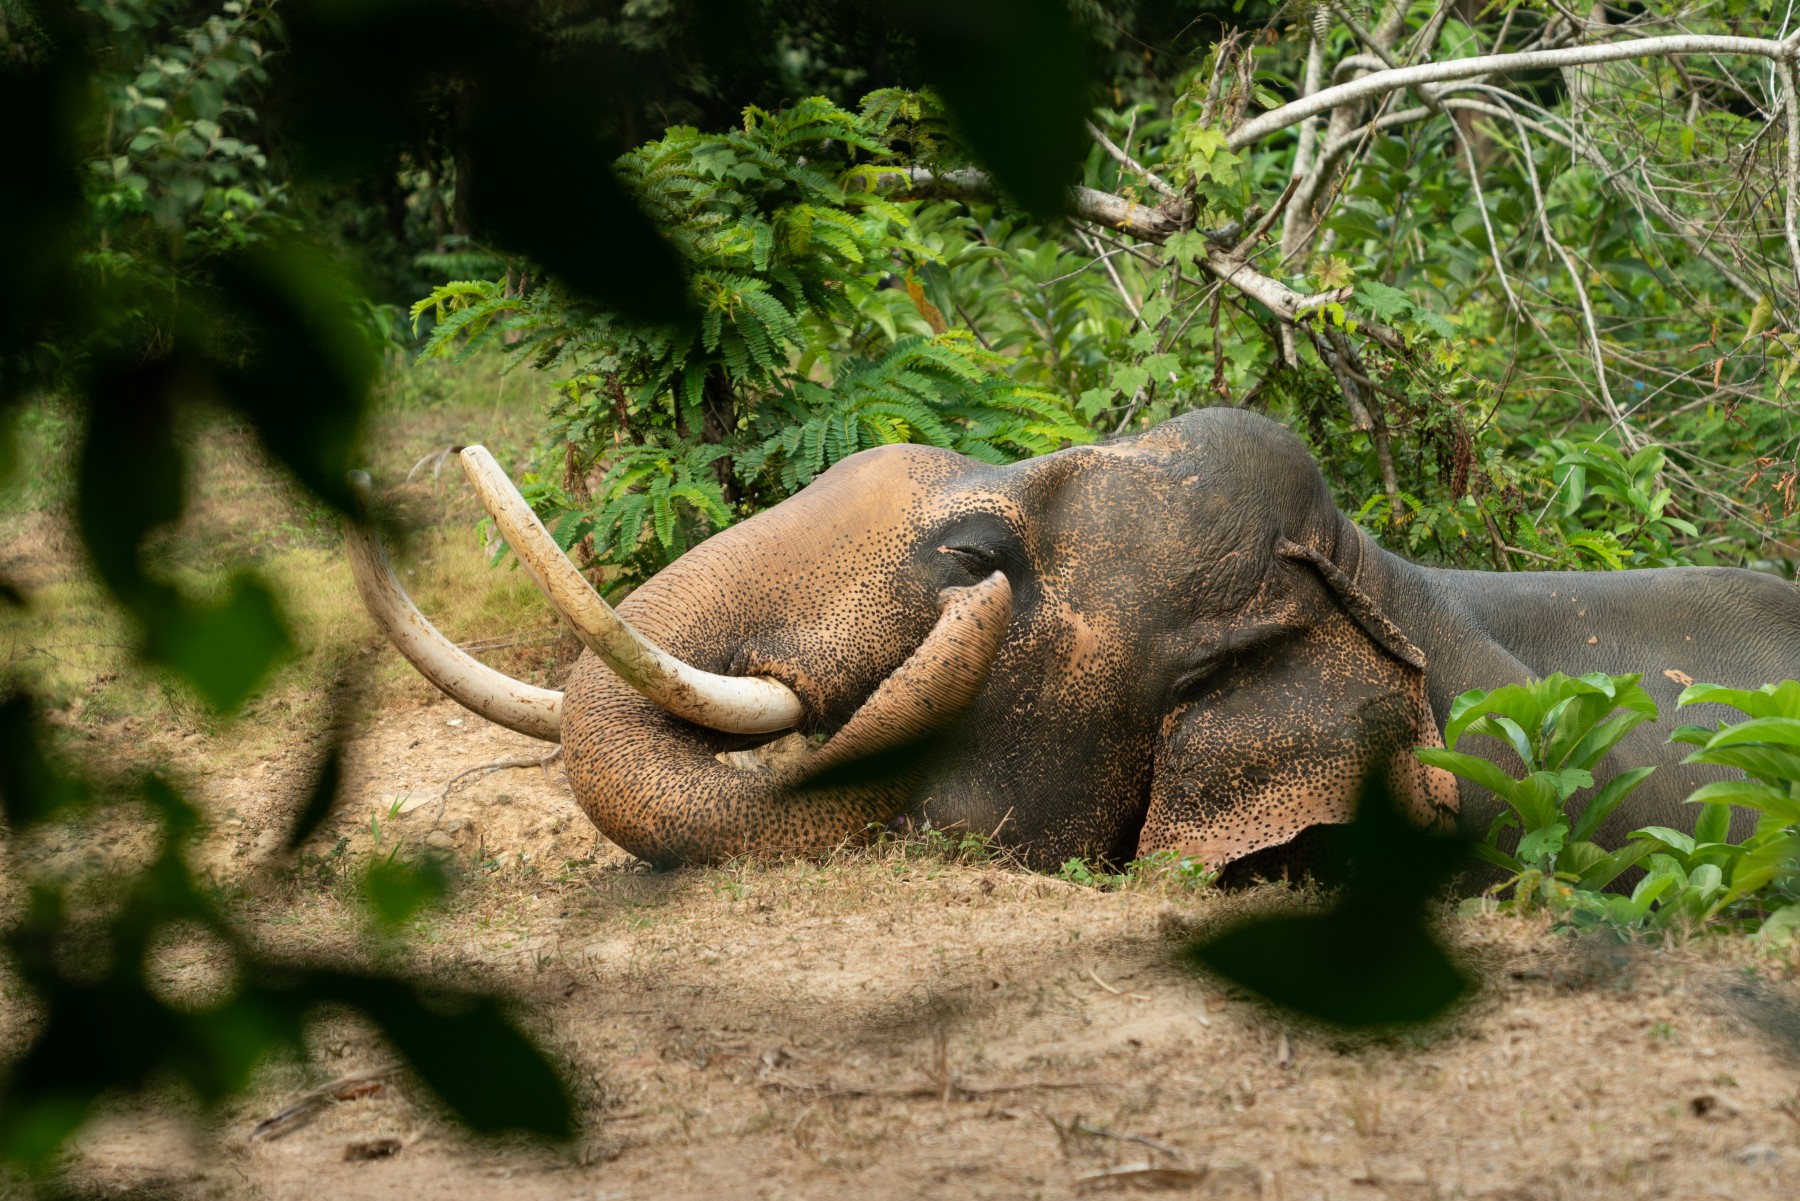 Chok the elephant at Following Giants elephant-friendly venue - World Animal Protection